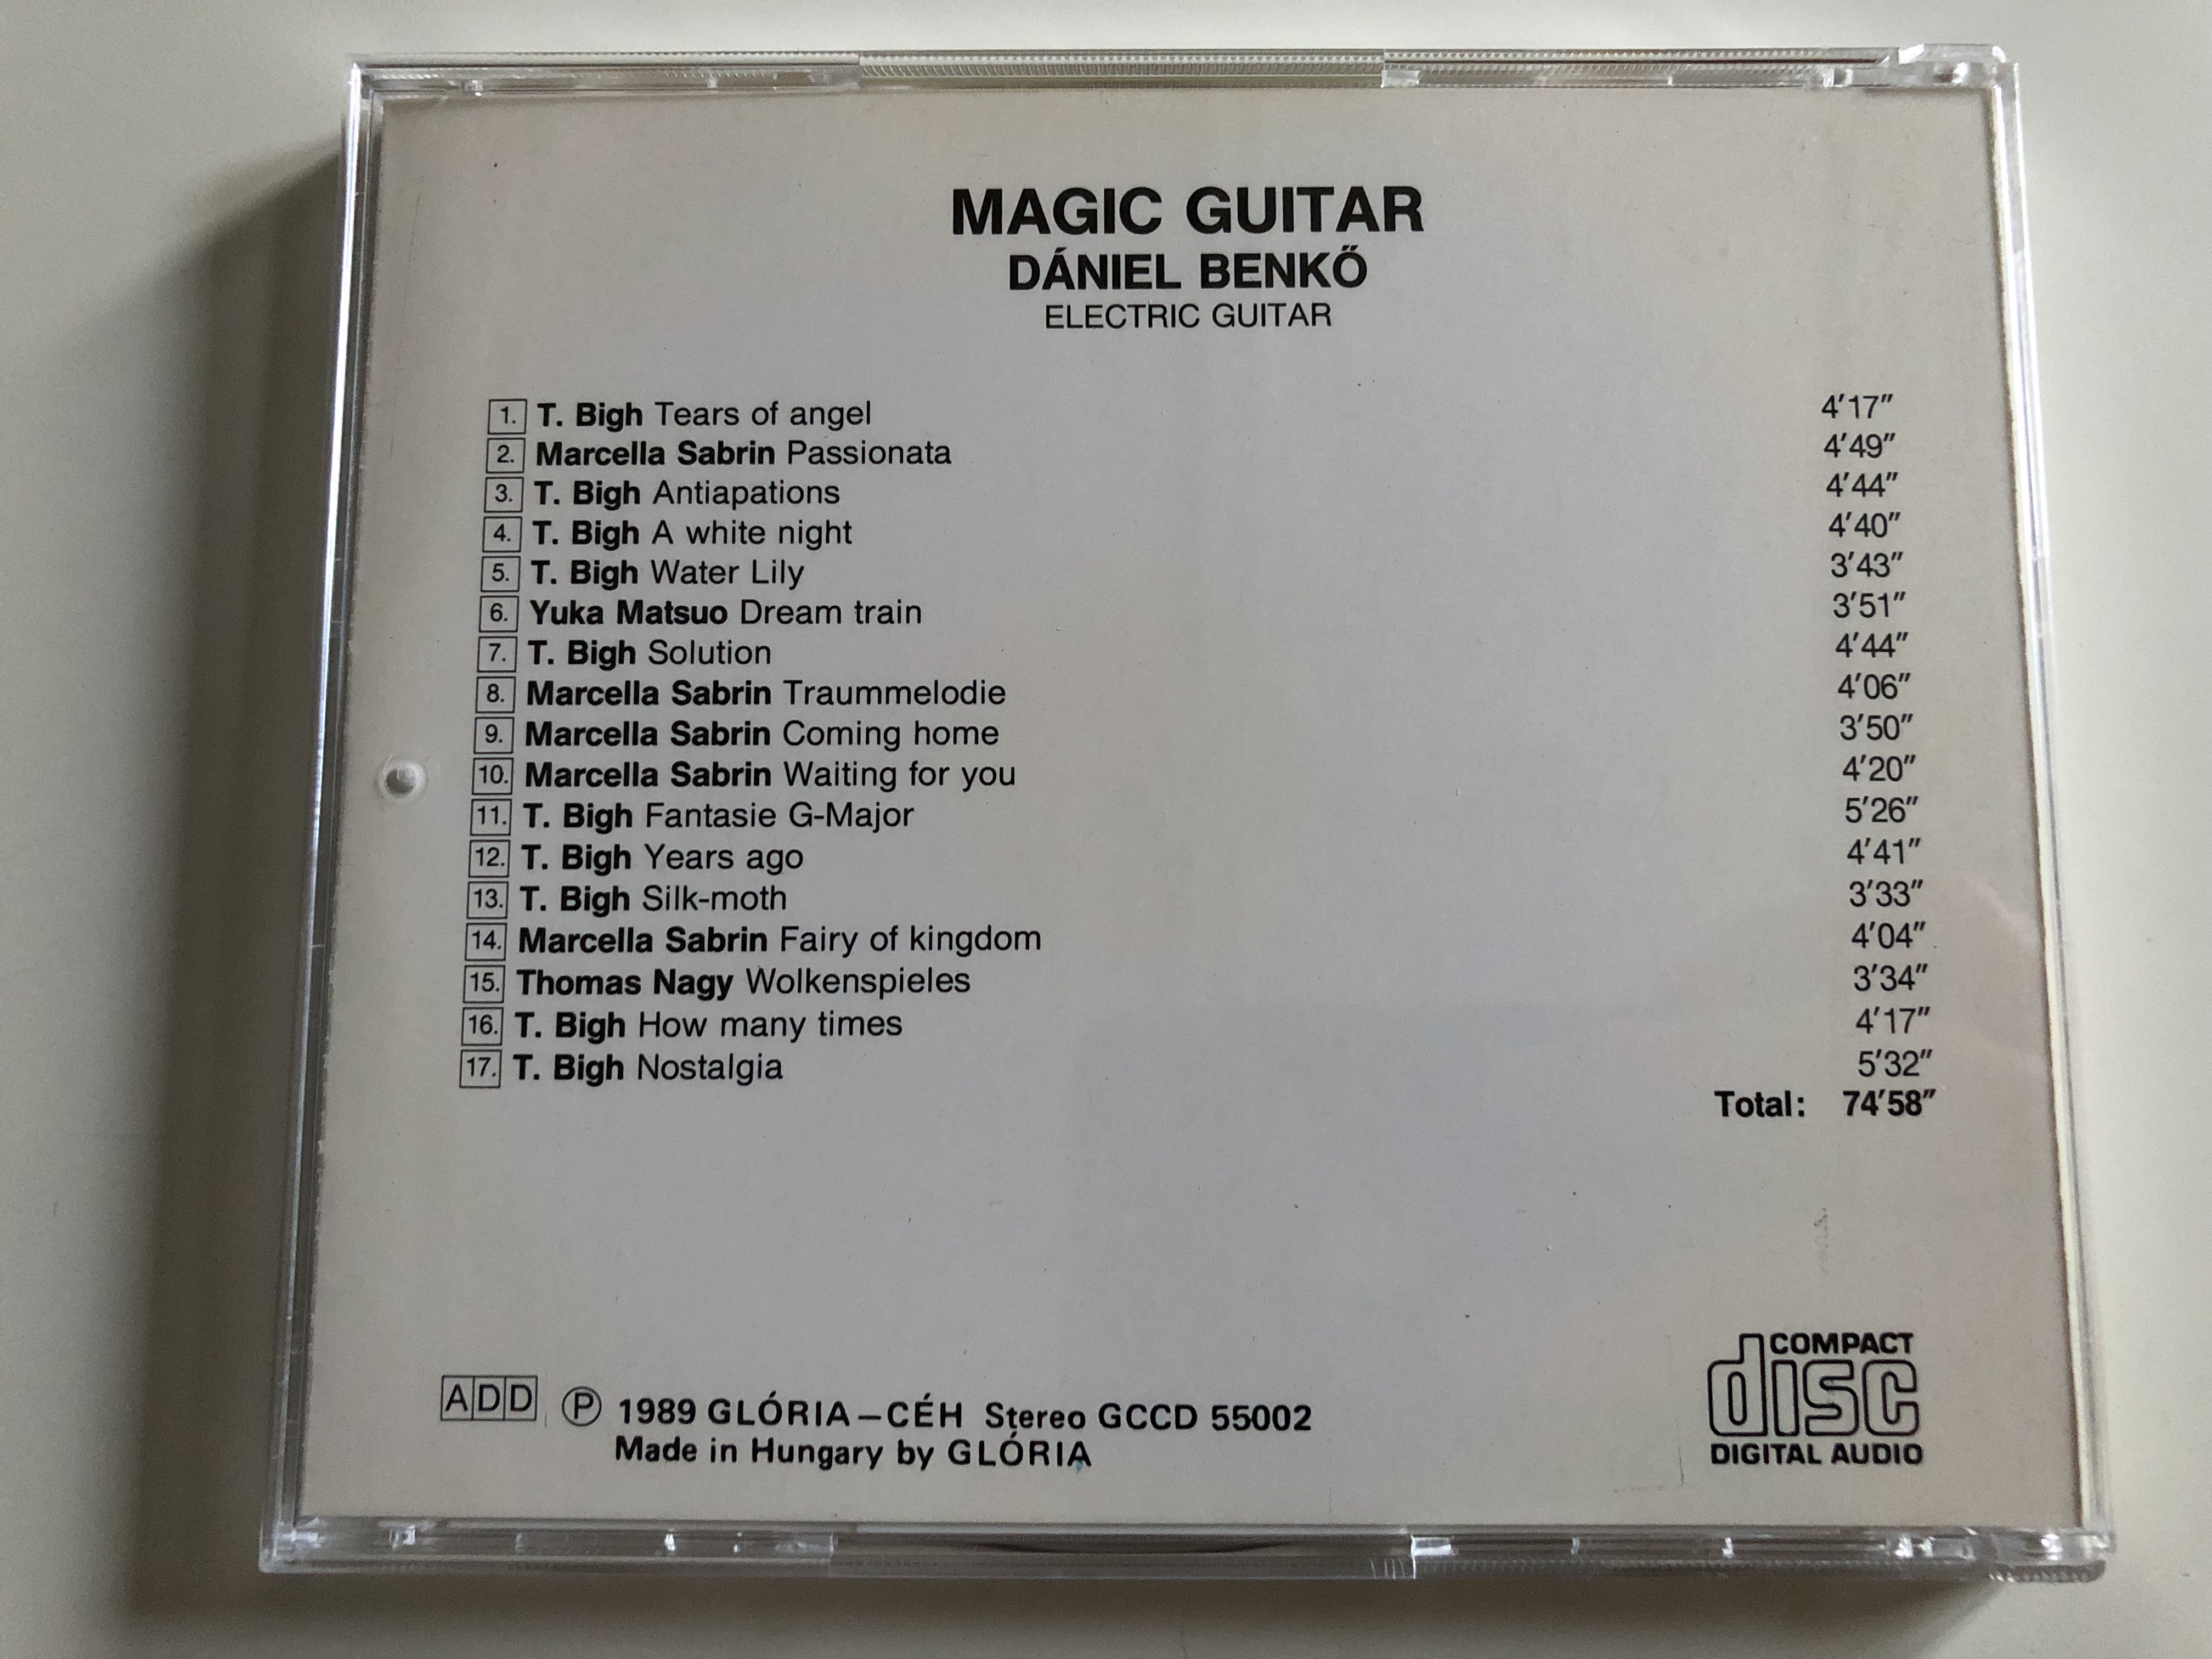 magic-guitar-daniel-benk-electric-guitar-yuca-matsuo-electric-organ-thomas-bigh-drums-bob-lambert-sint.-programs-melancholy-ensemble-stereo-gccd-55002-audio-cd-1989-gl-ria-c-h-5-.jpg